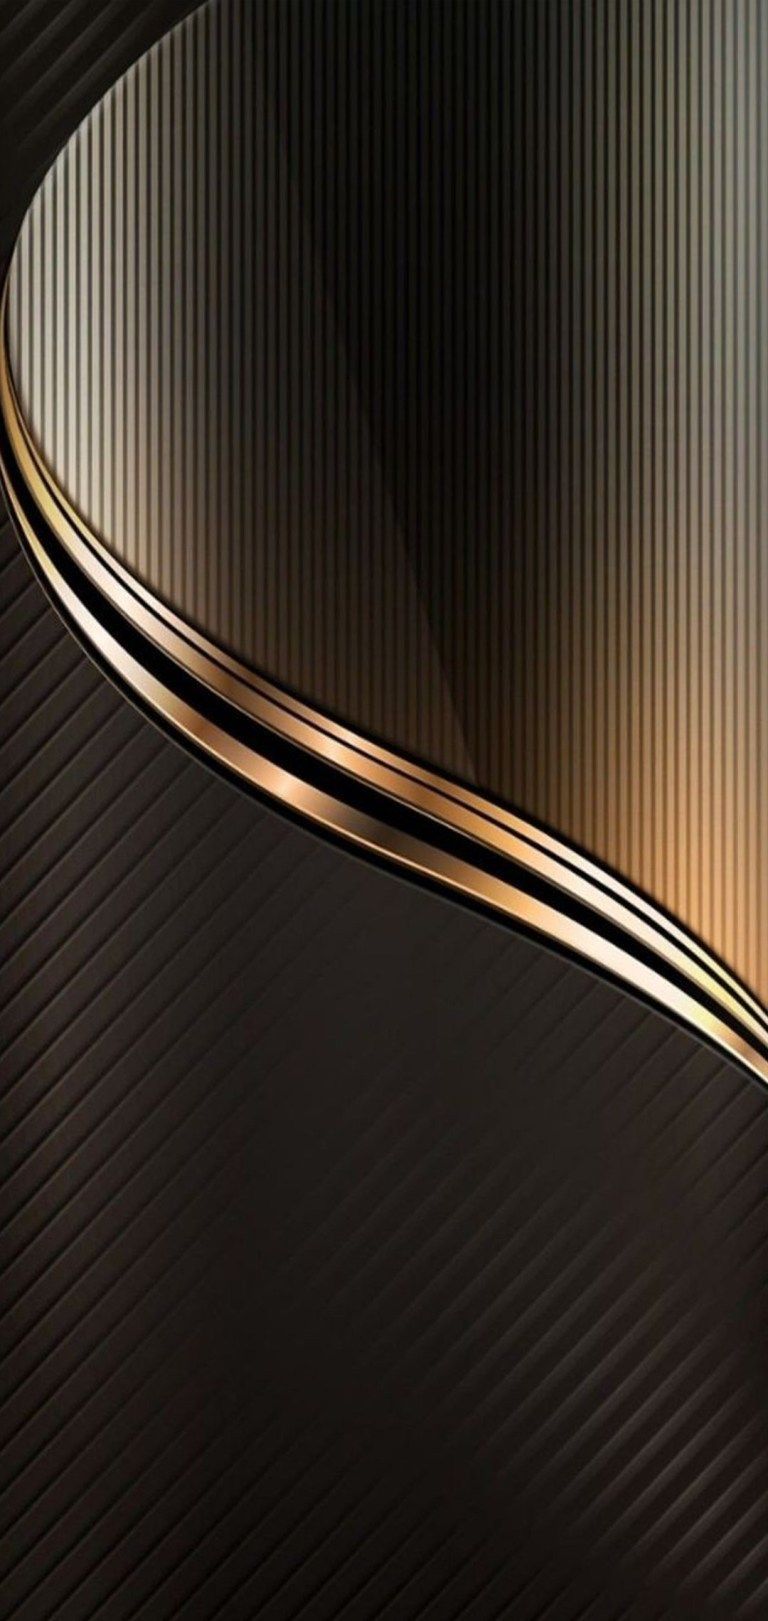 OnePlus 6 Background with Dark Gold Elegant Wallpaper Wallpaper. Wallpaper Download. High Resolution Wallpaper. Gold elegant wallpaper, Gold wallpaper background, Gold and black wallpaper